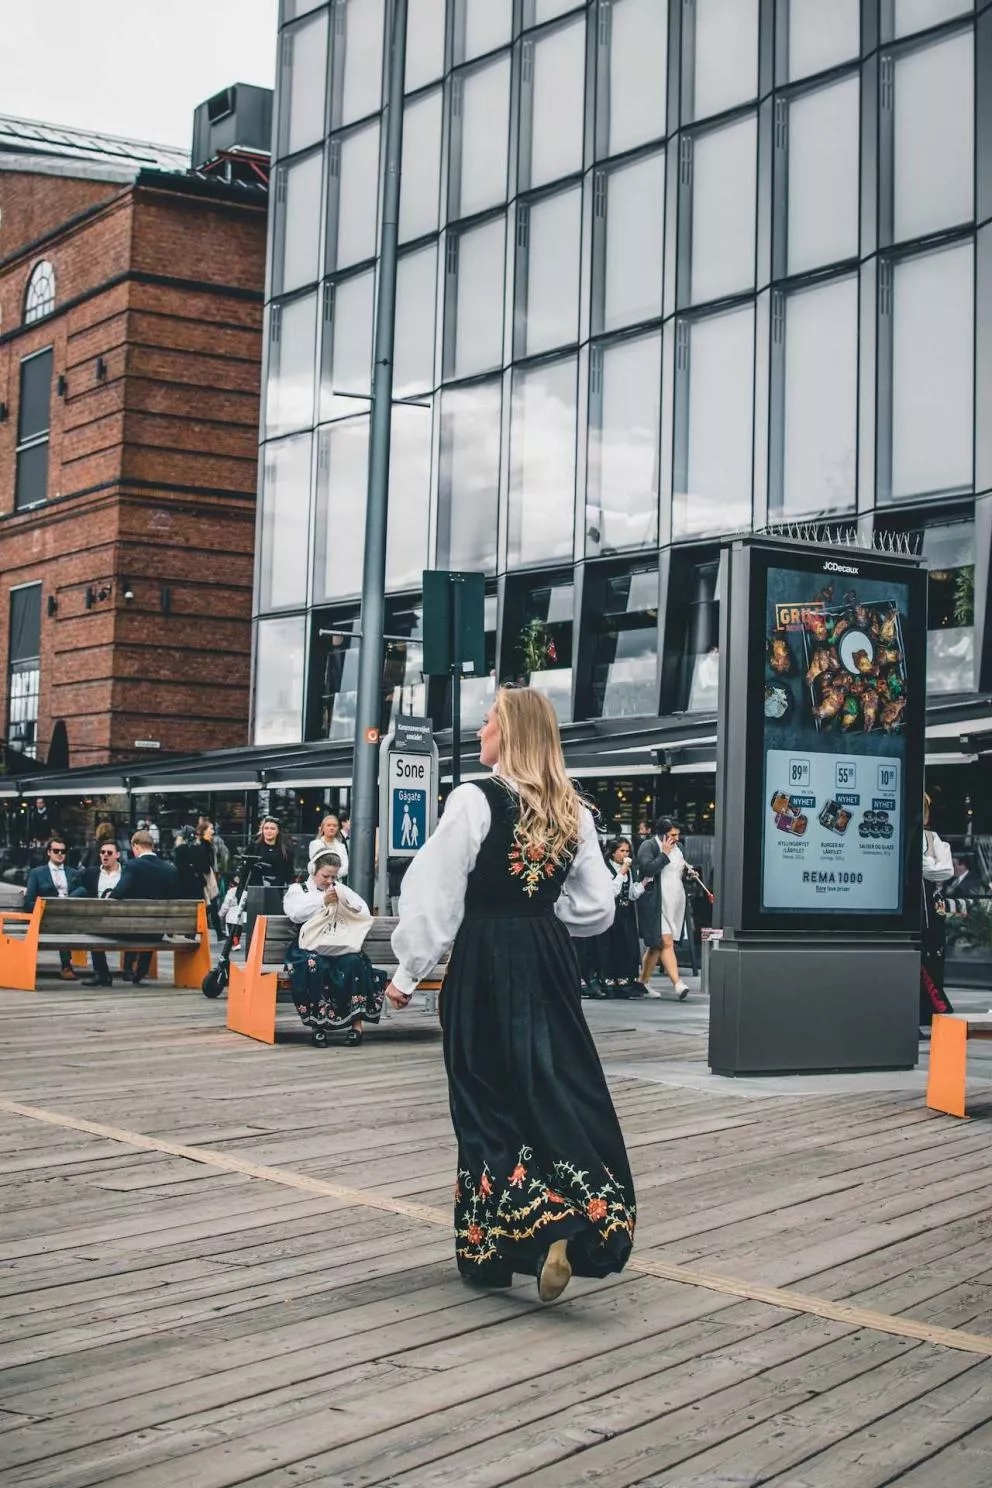 Norwegian woman in traditional bunad during Constitution Day (photo: Sylwia Smółkowska / KierunekNorwegia.pl)